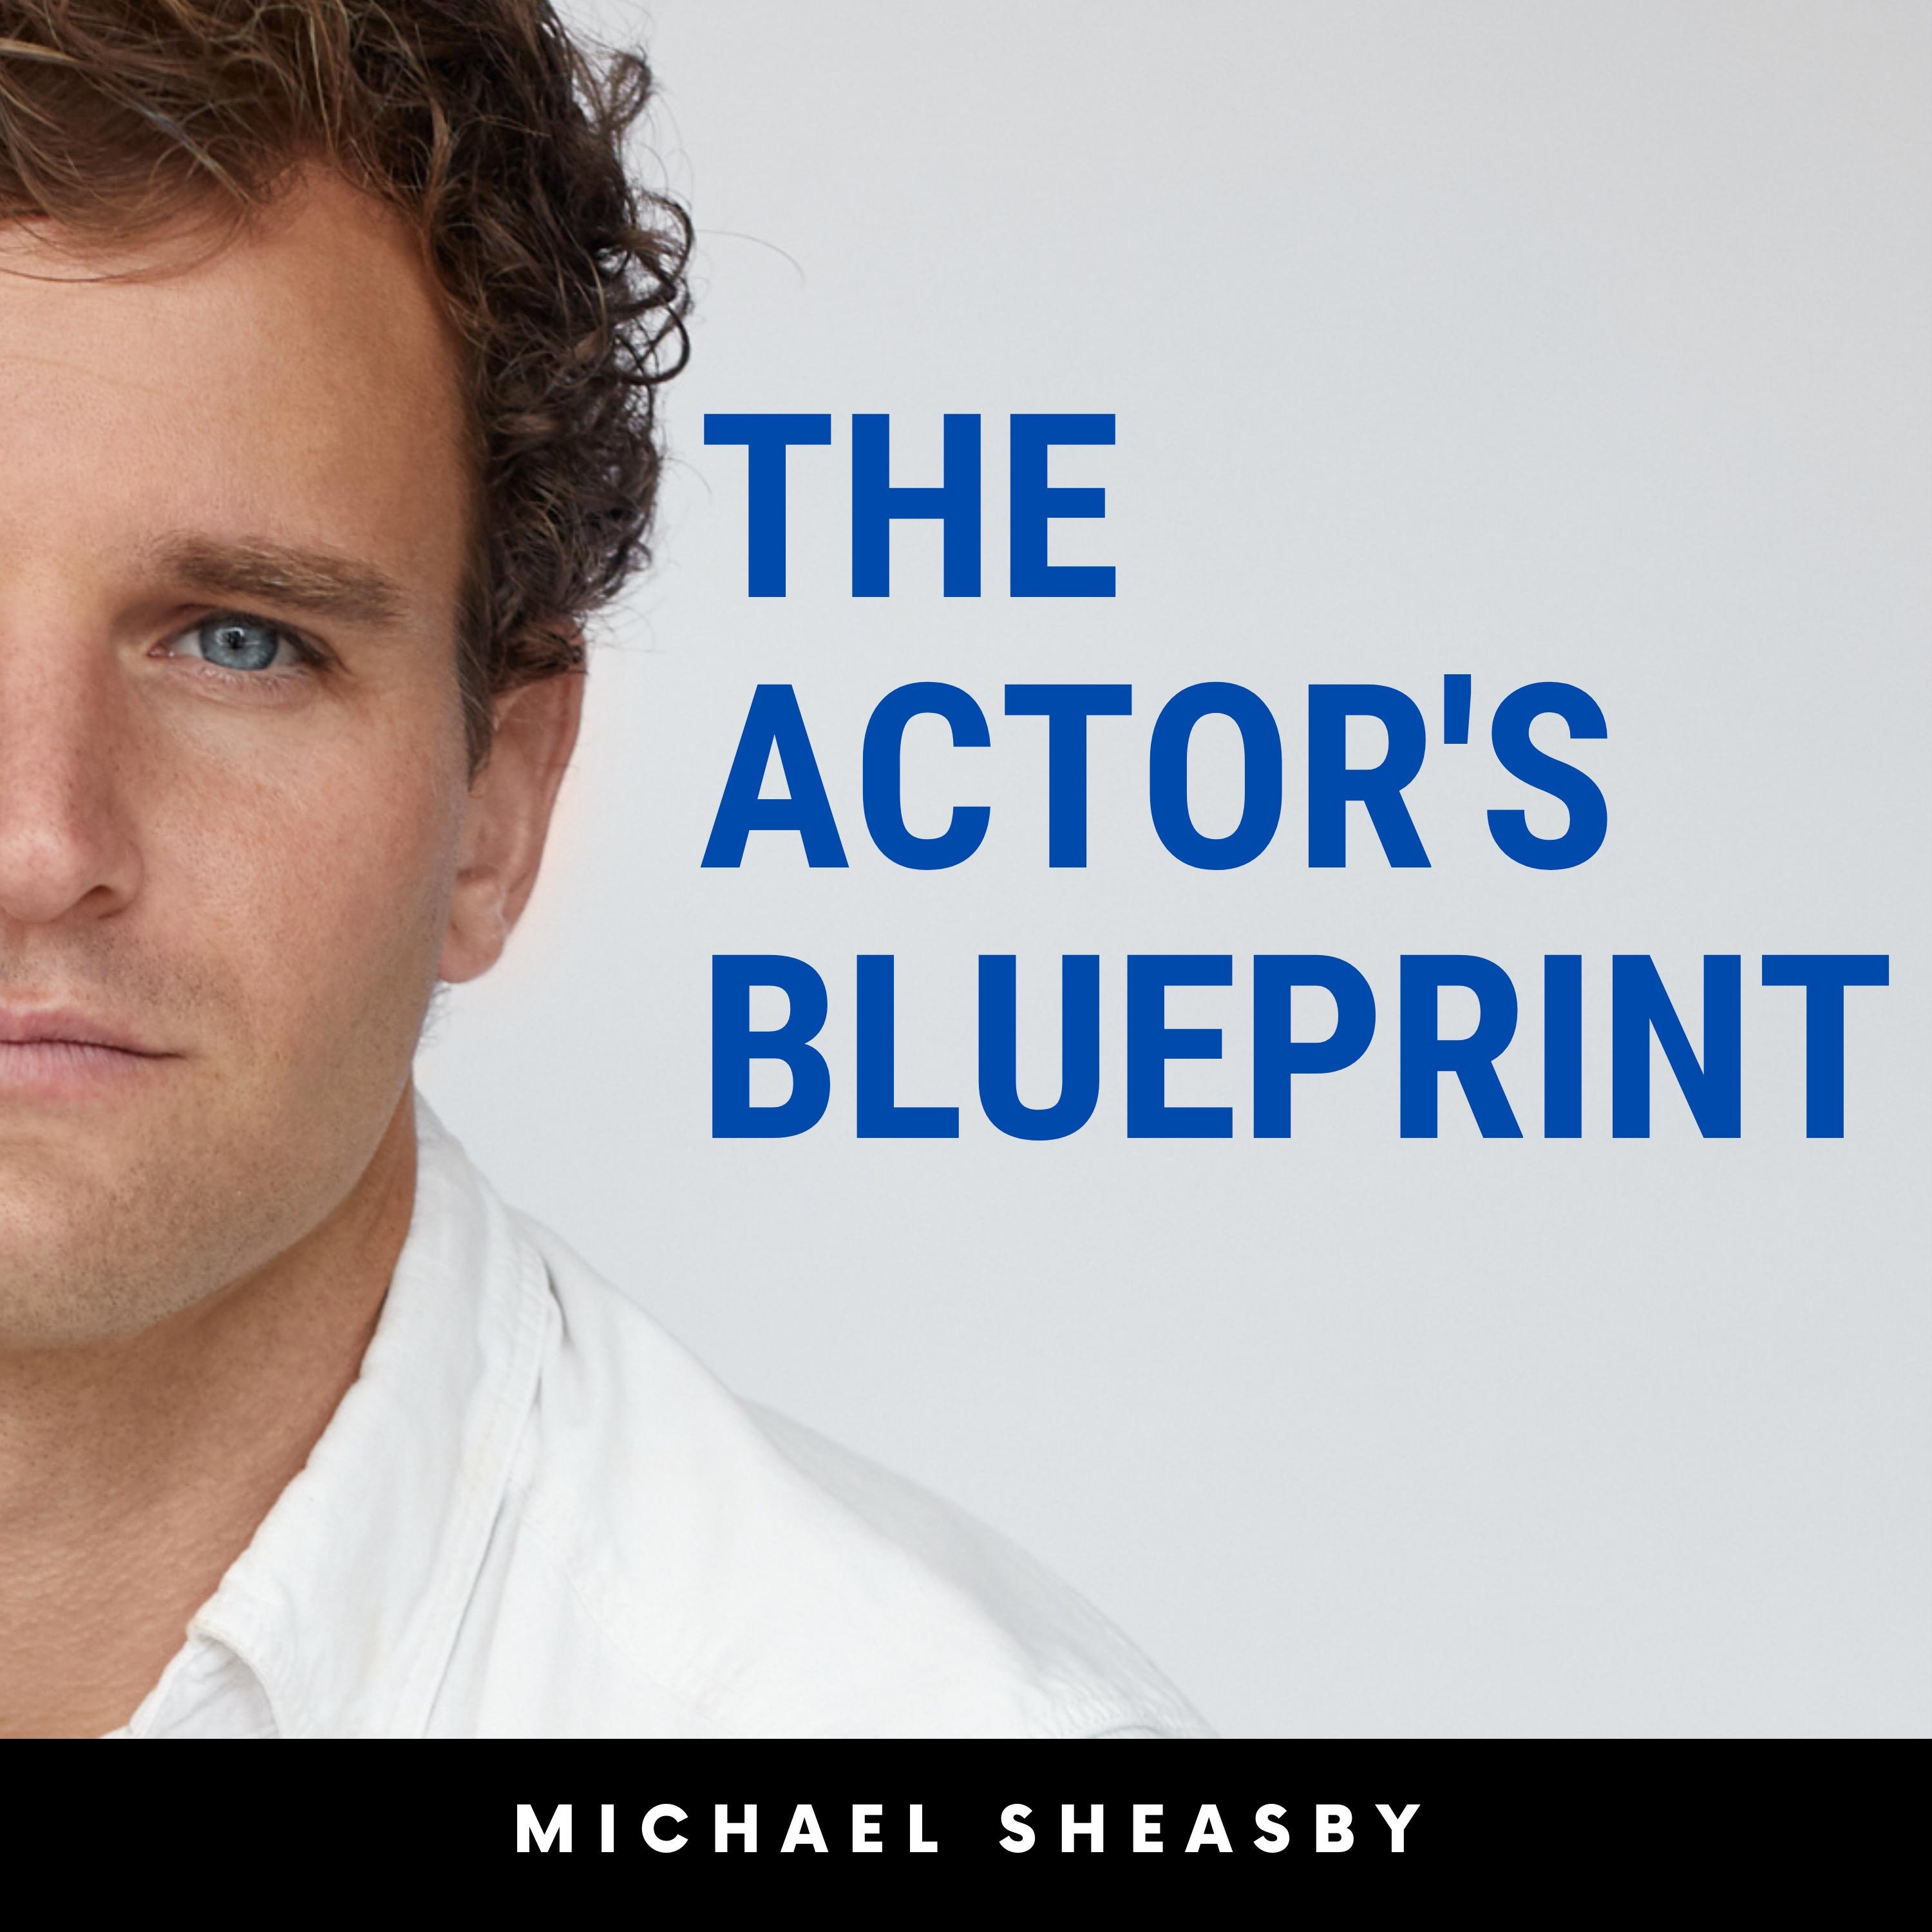 The Actor's Blueprint